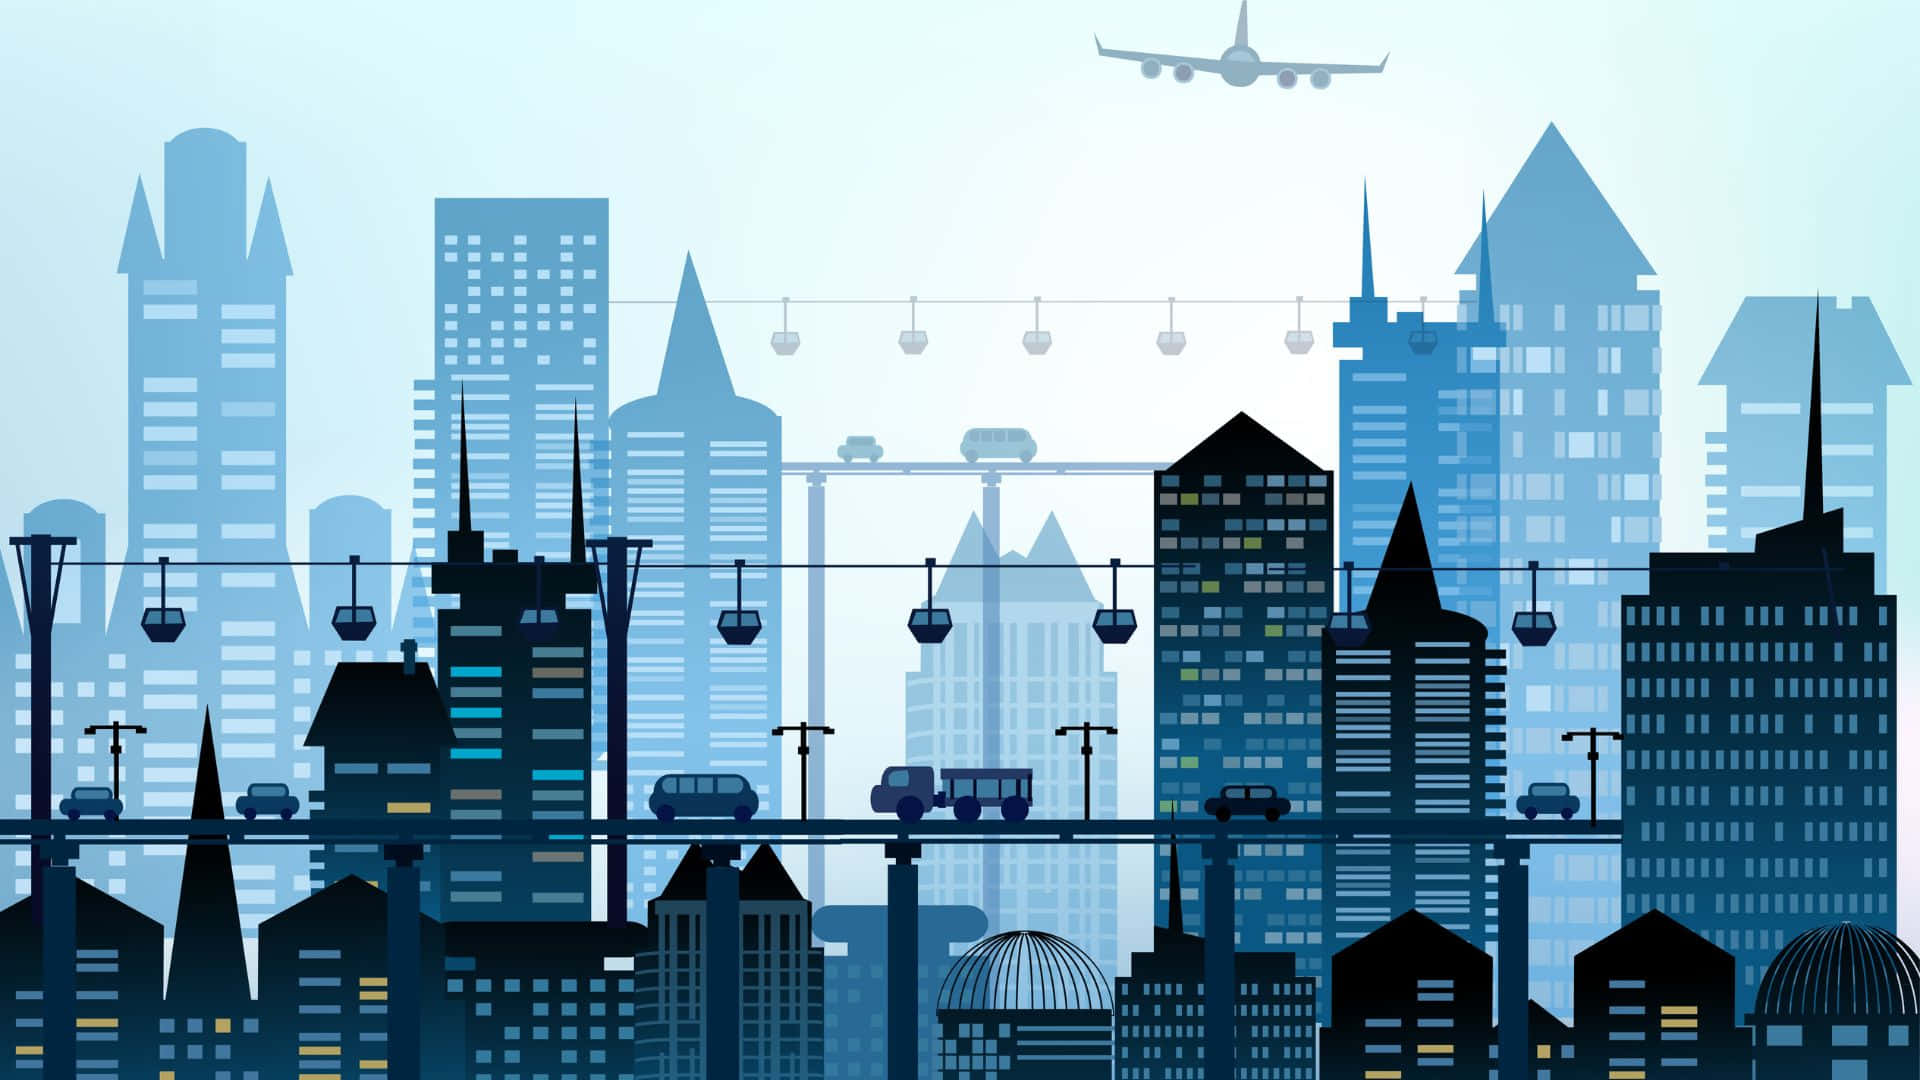 City Buildings Vector Illustration